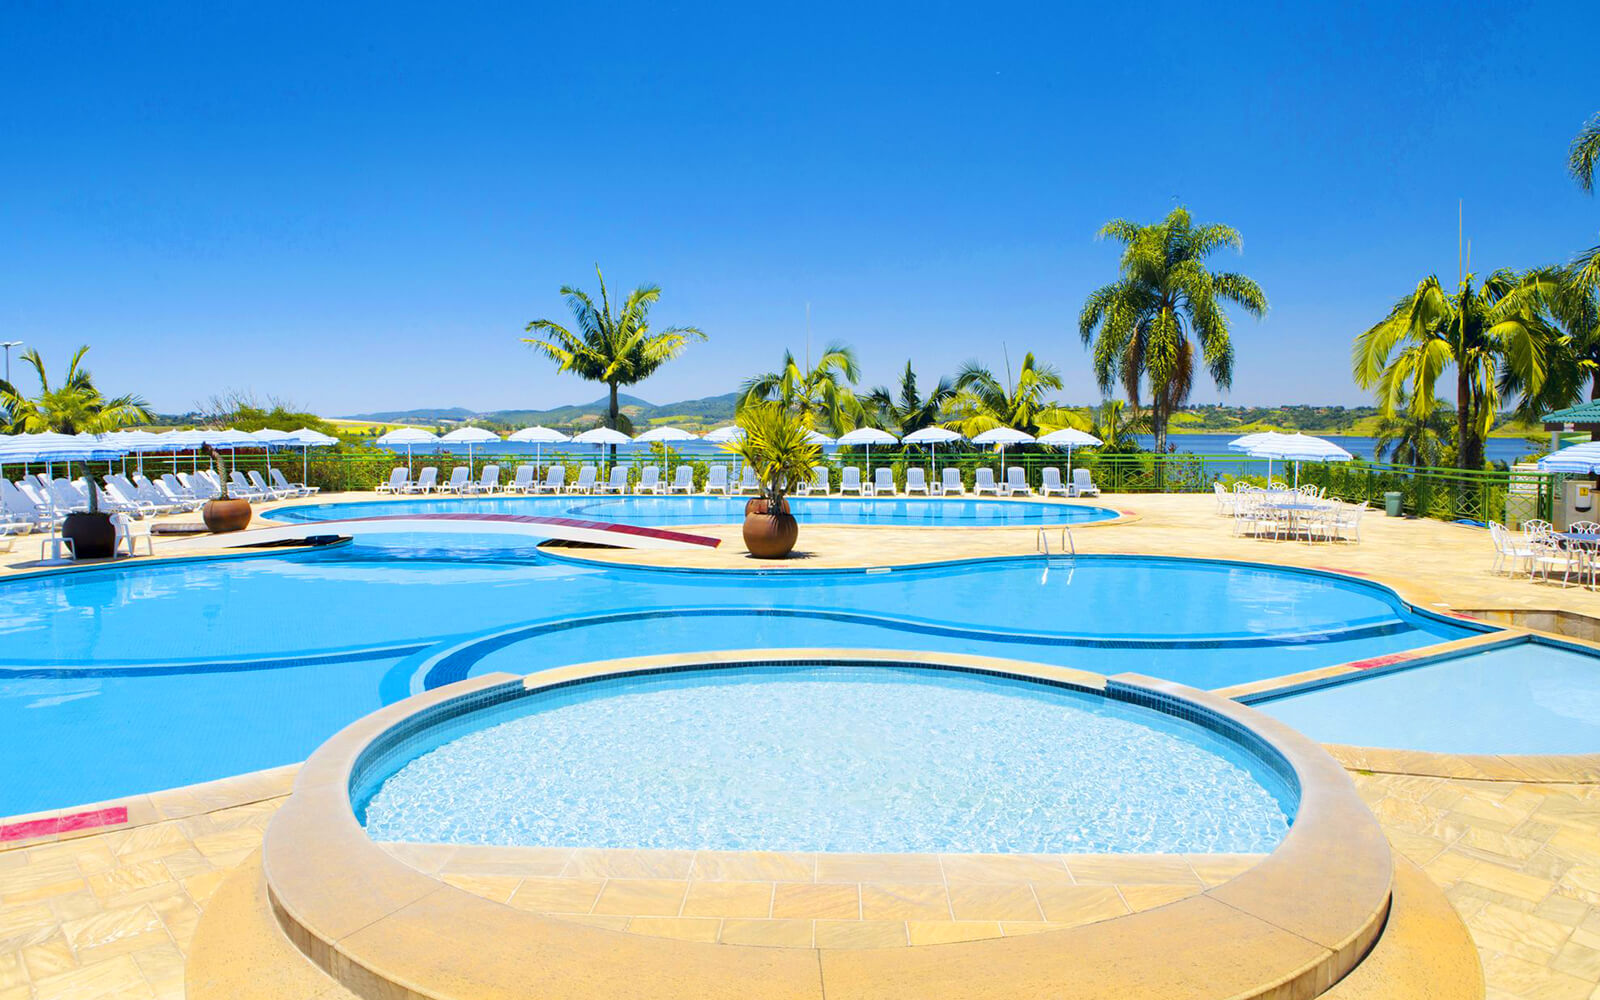 Club Med Lake Paradise